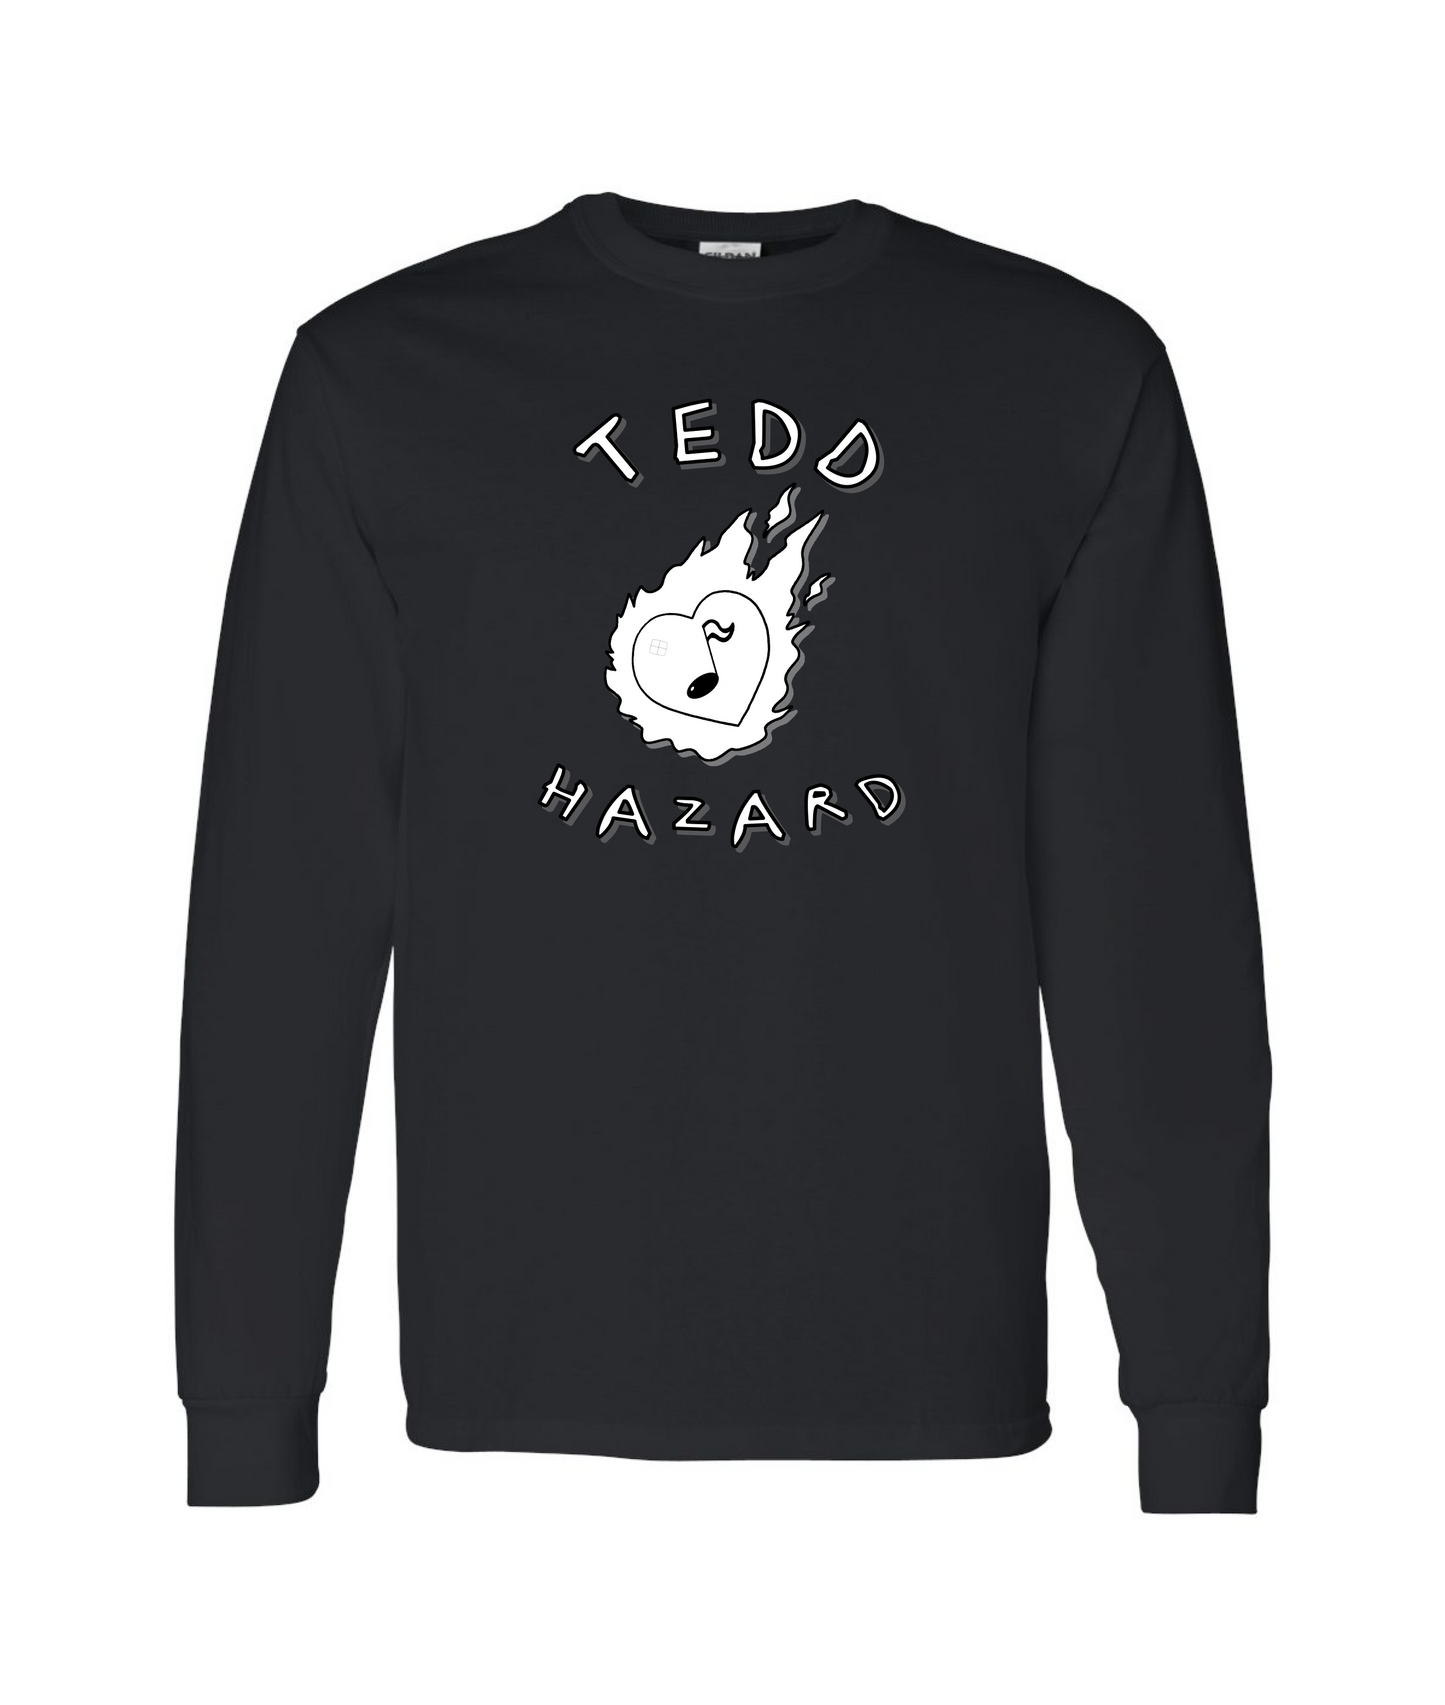 Tedd Hazard - Heart Logo - Black Long Sleeve T